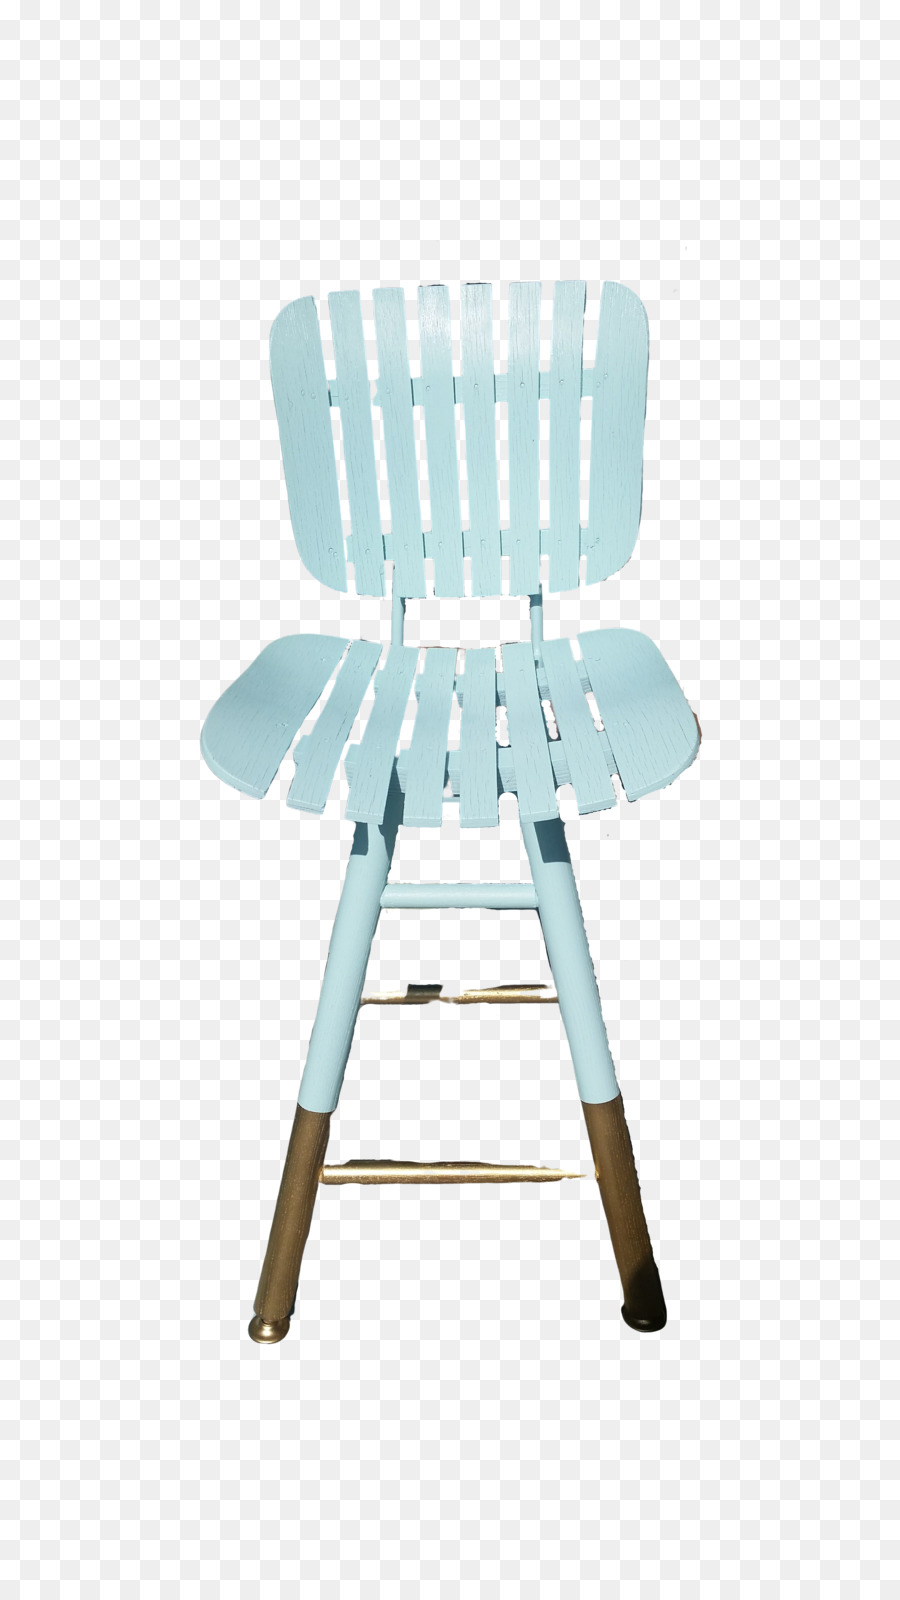 chair armrest plastic garden furniture furniture